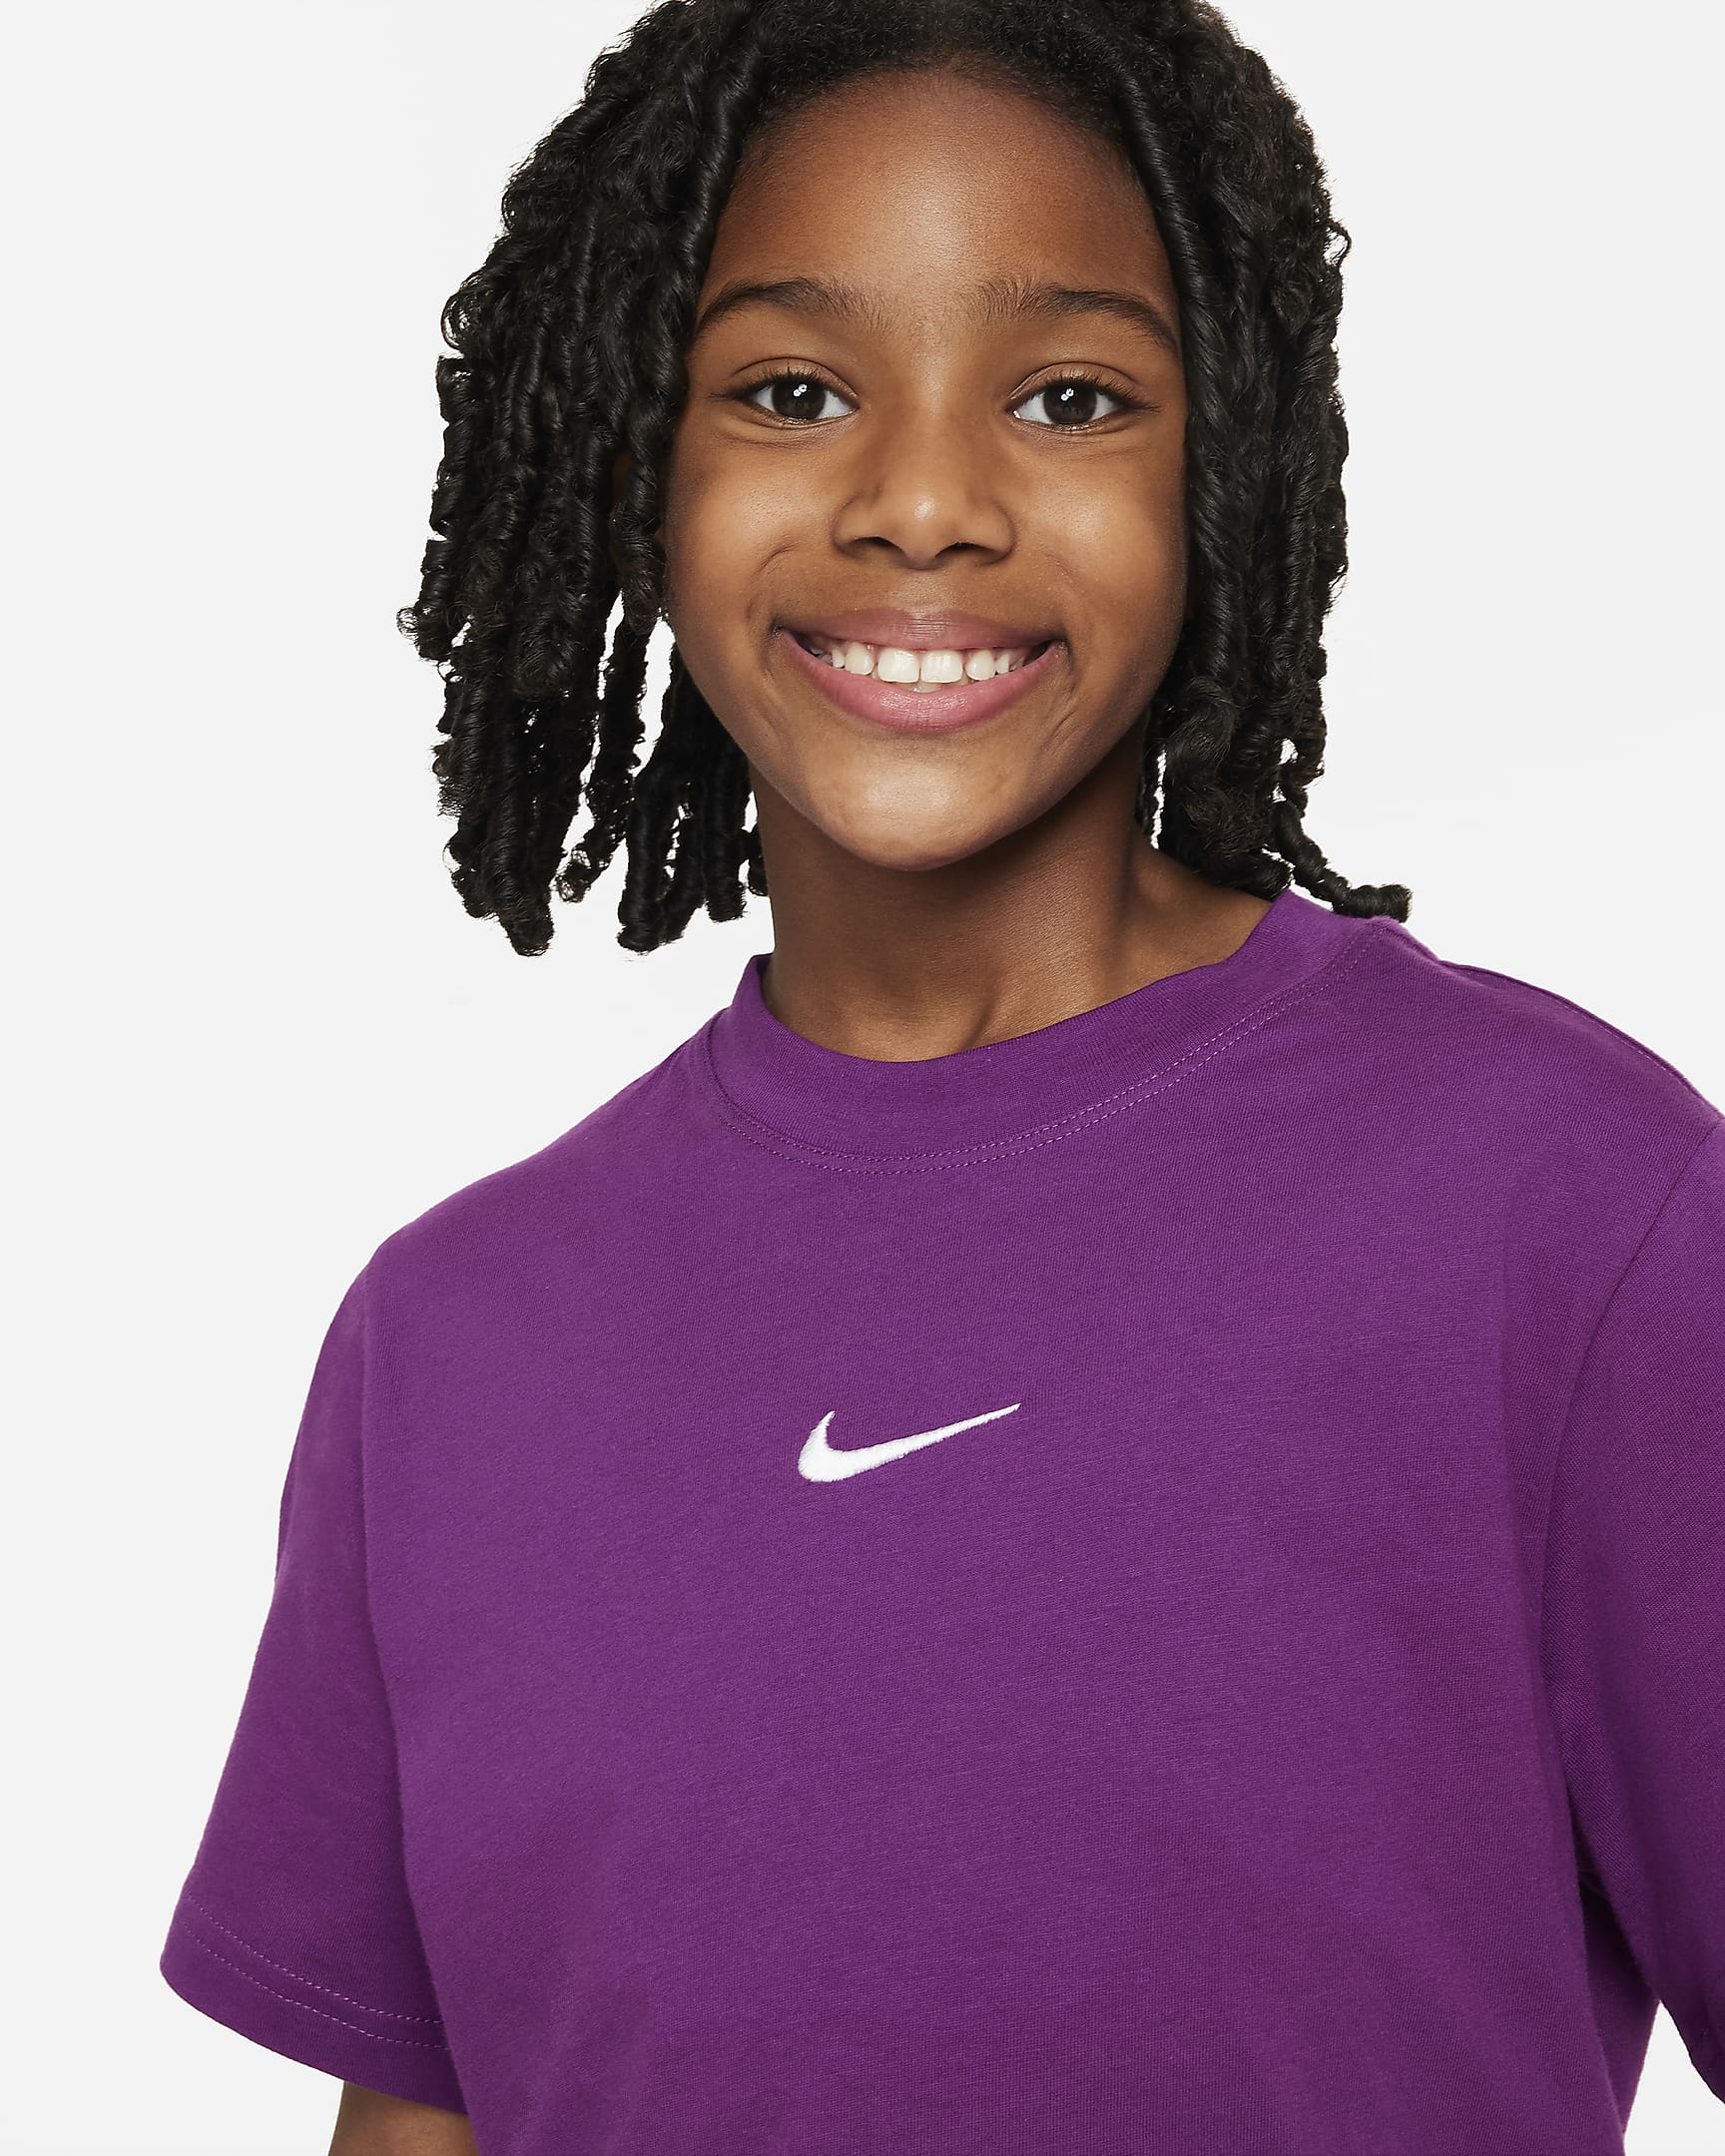 Nike Sportswear Older Kids' (Girls') T-Shirt - Viotech/White